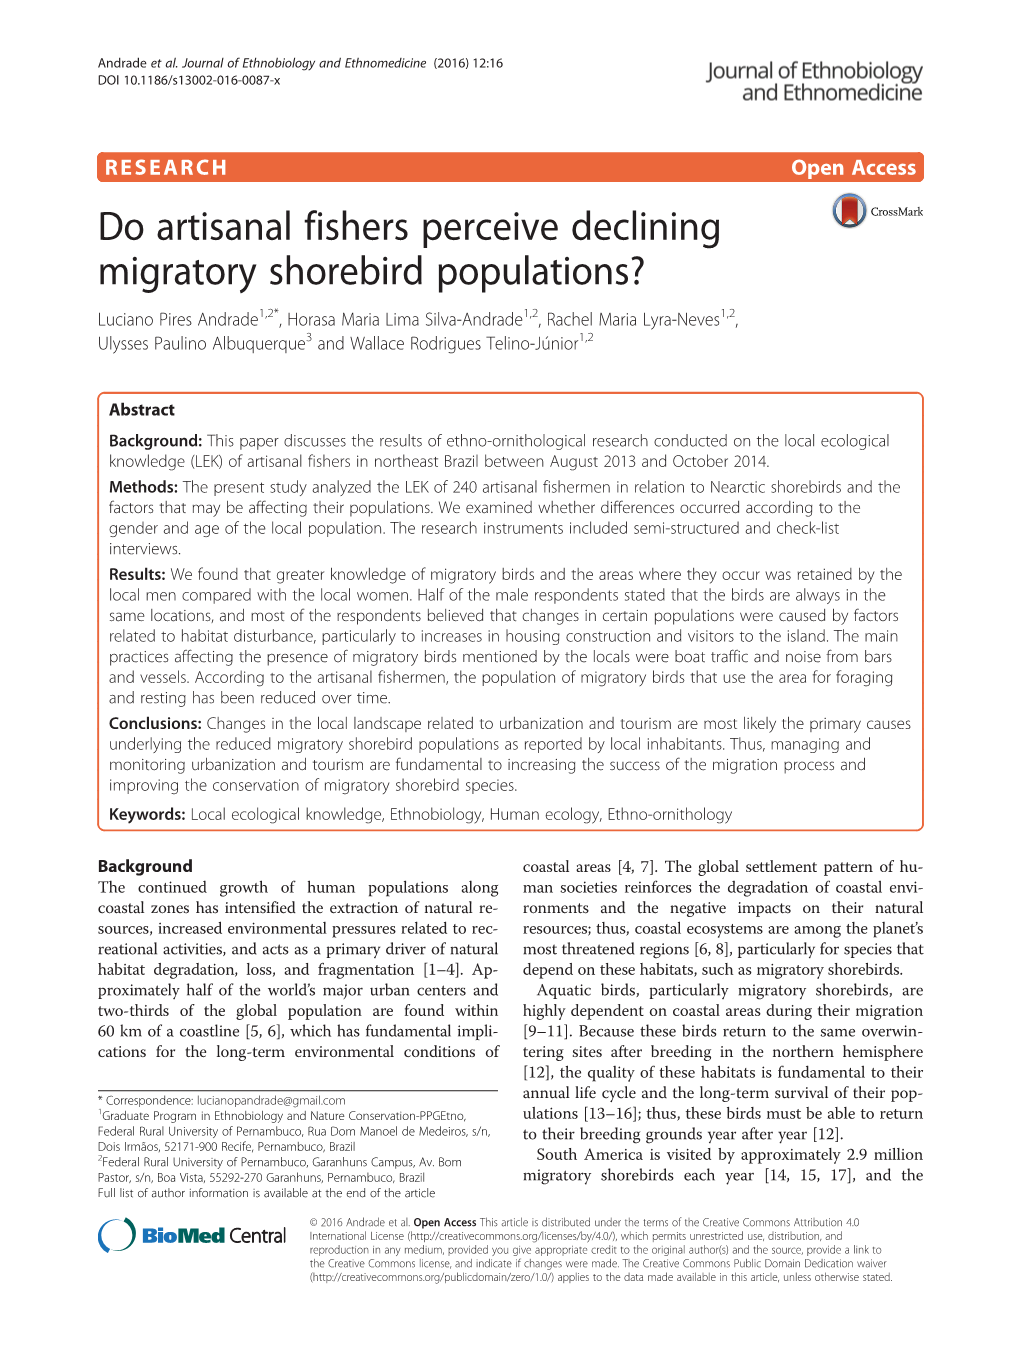 Do Artisanal Fishers Perceive Declining Migratory Shorebird Populations?